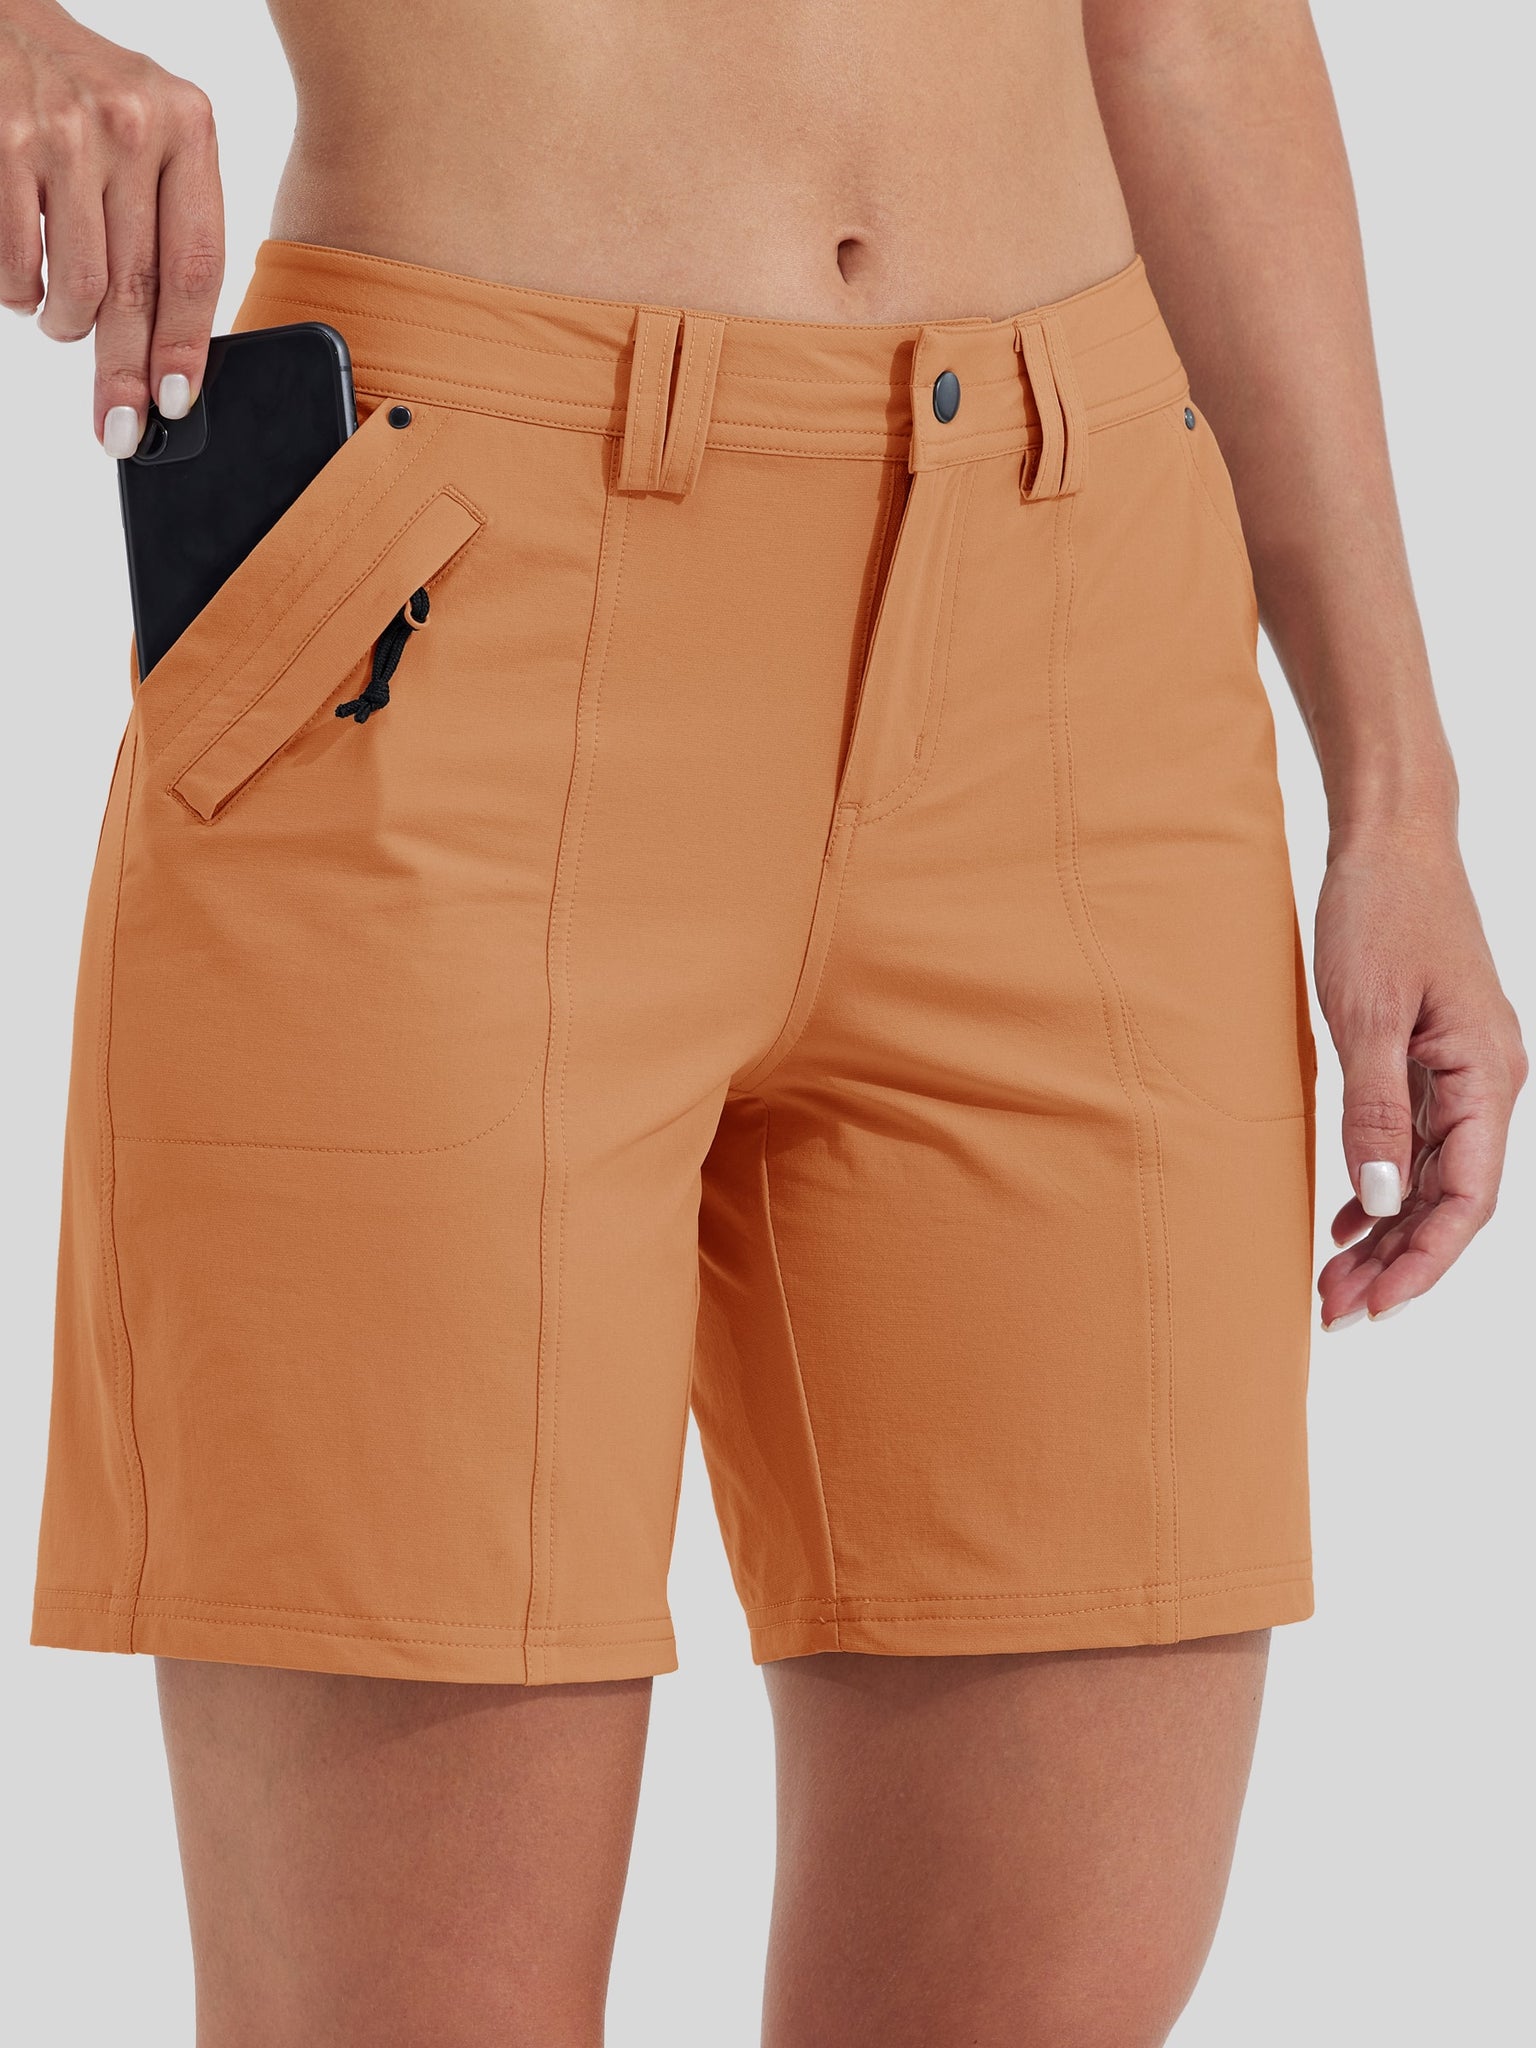 Women's Outdoor Golf Shorts Water-Resistant 7 Inch